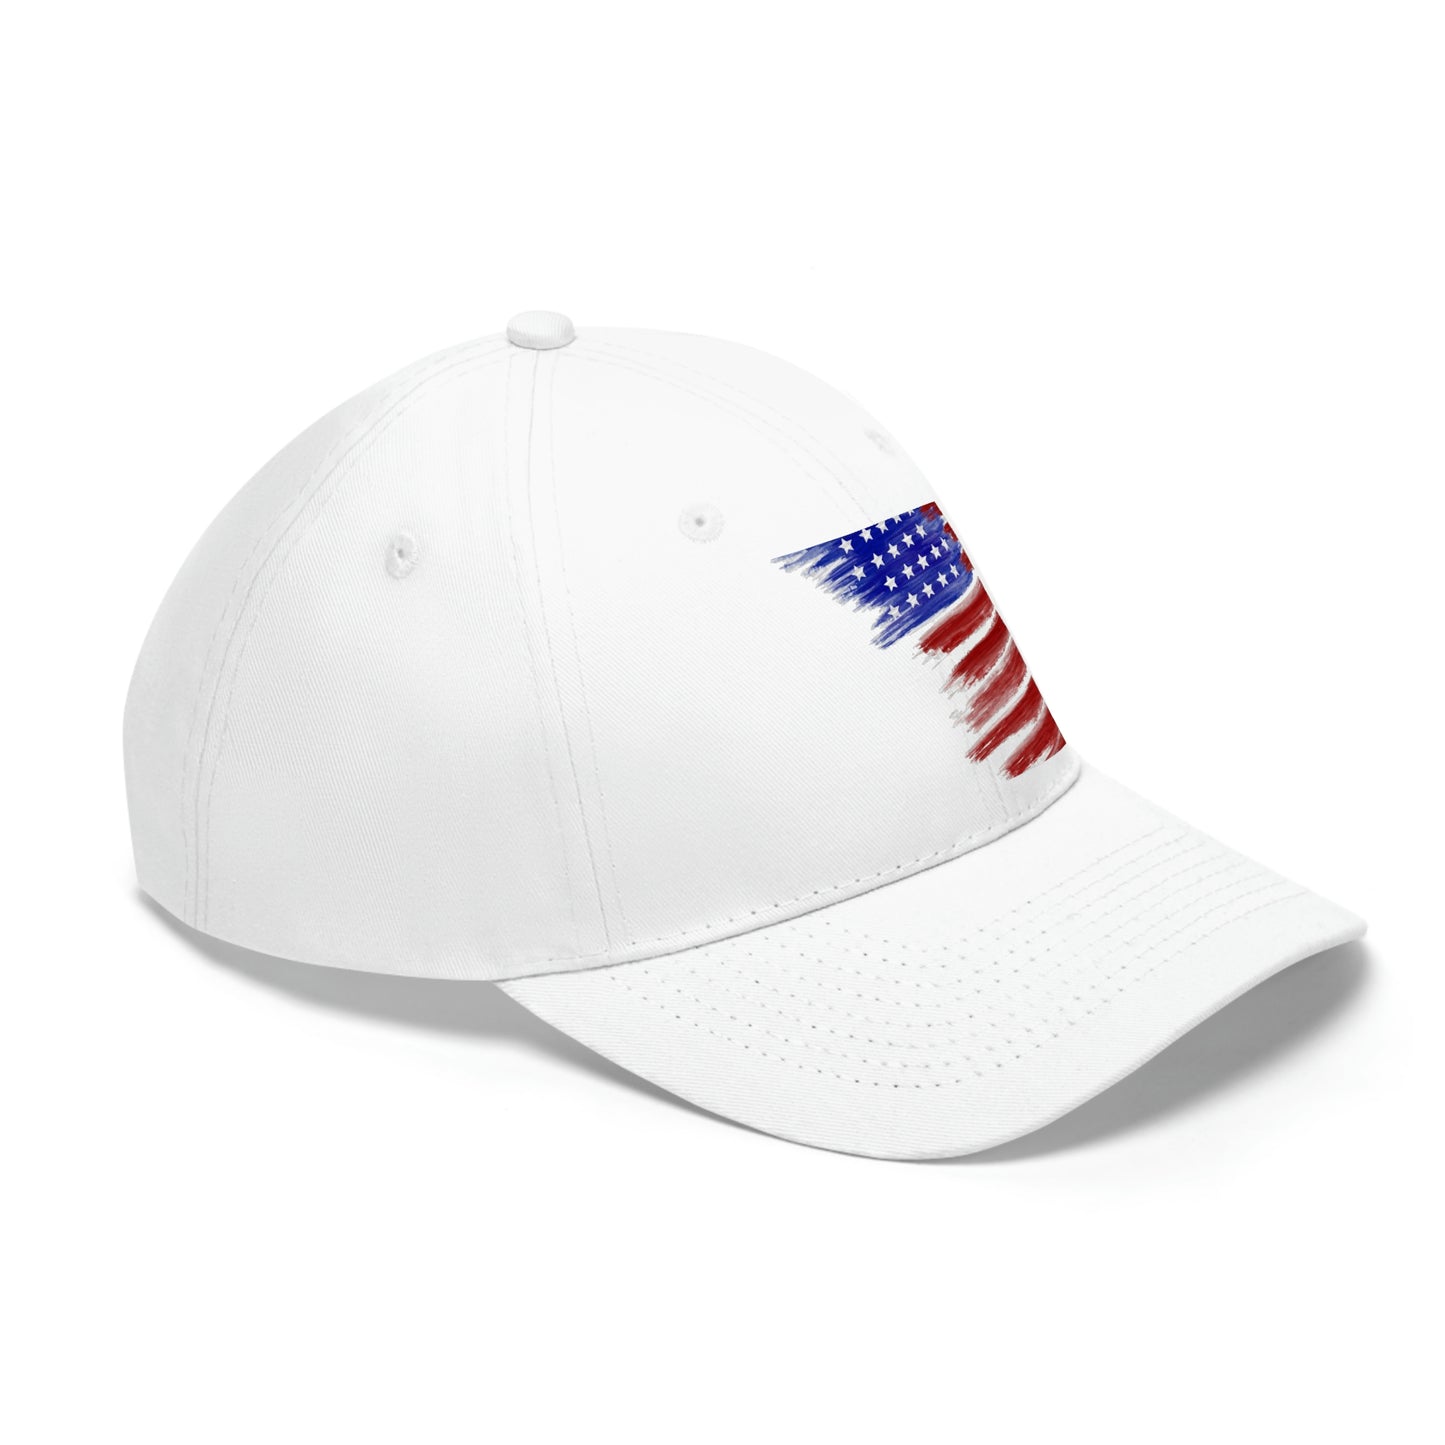 U.S Flag Women and Men Hat, $th of July Hat Unisex Twill Hat